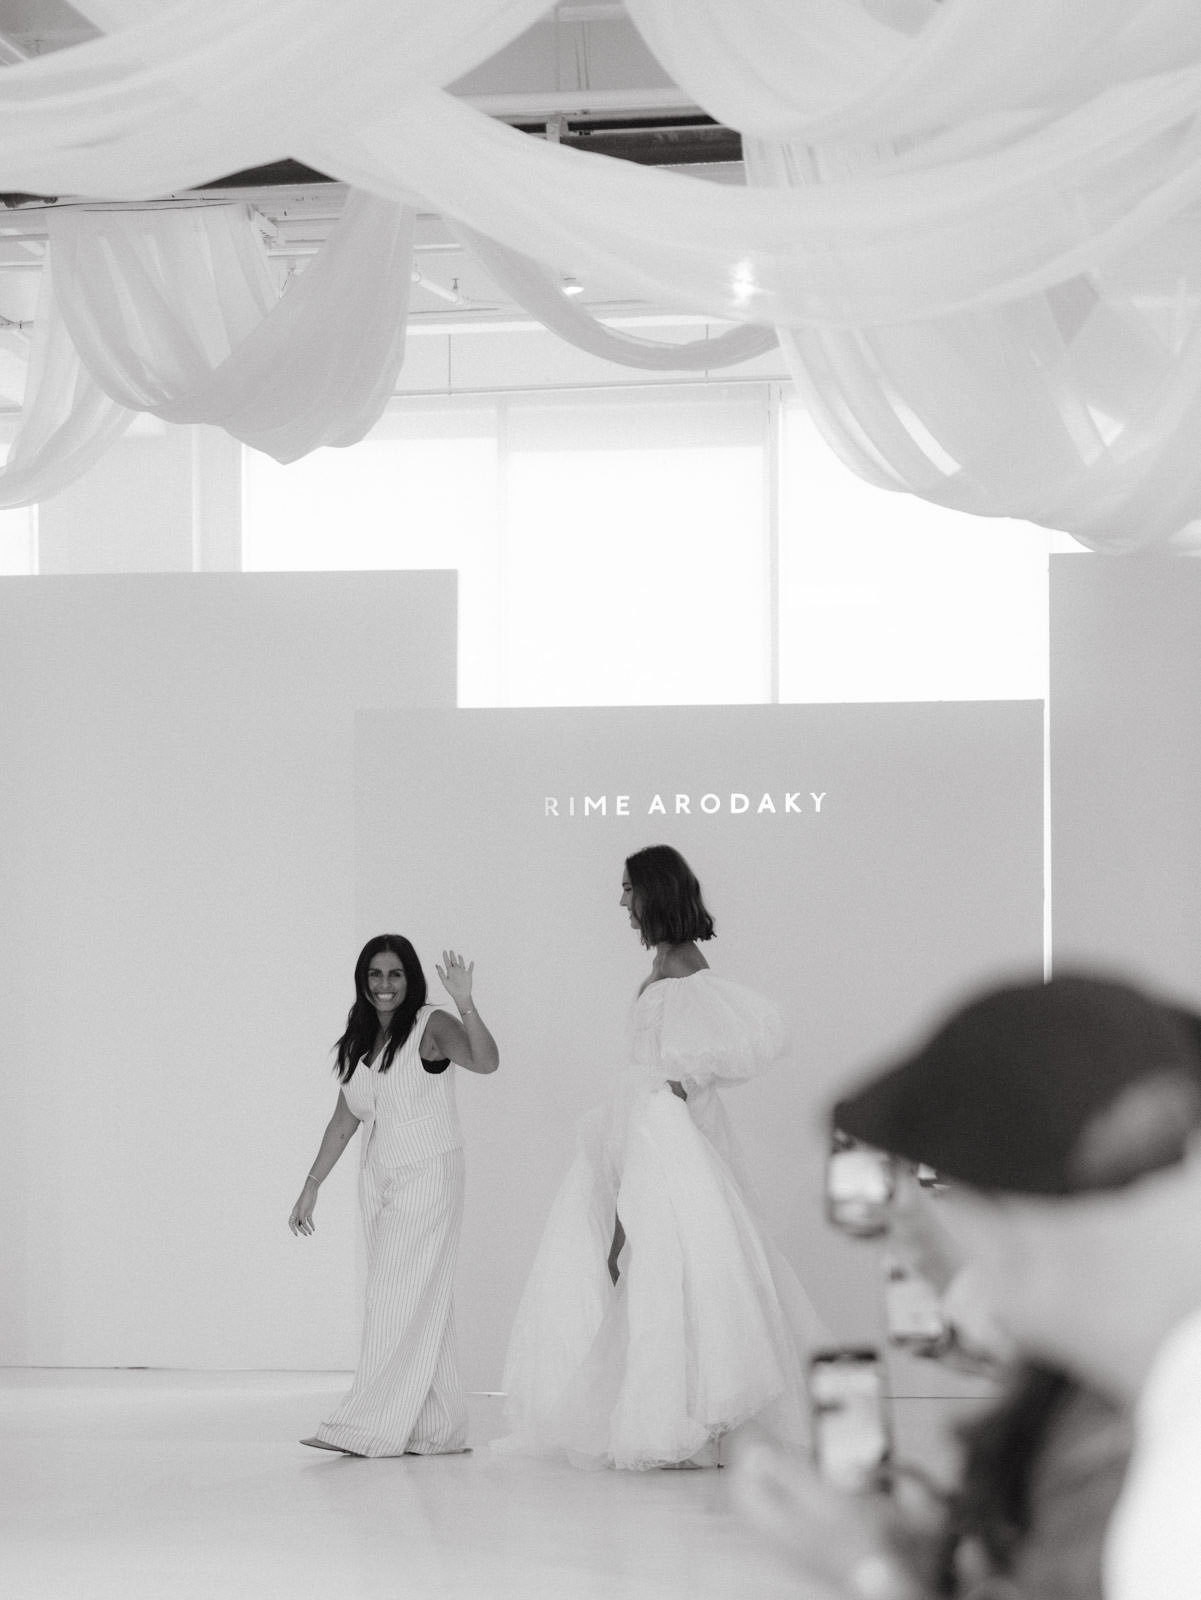 Editorial photo of models wearing wedding dresses by Rime Arodaky at the NYBFW. Image by Jenny Fu Studio